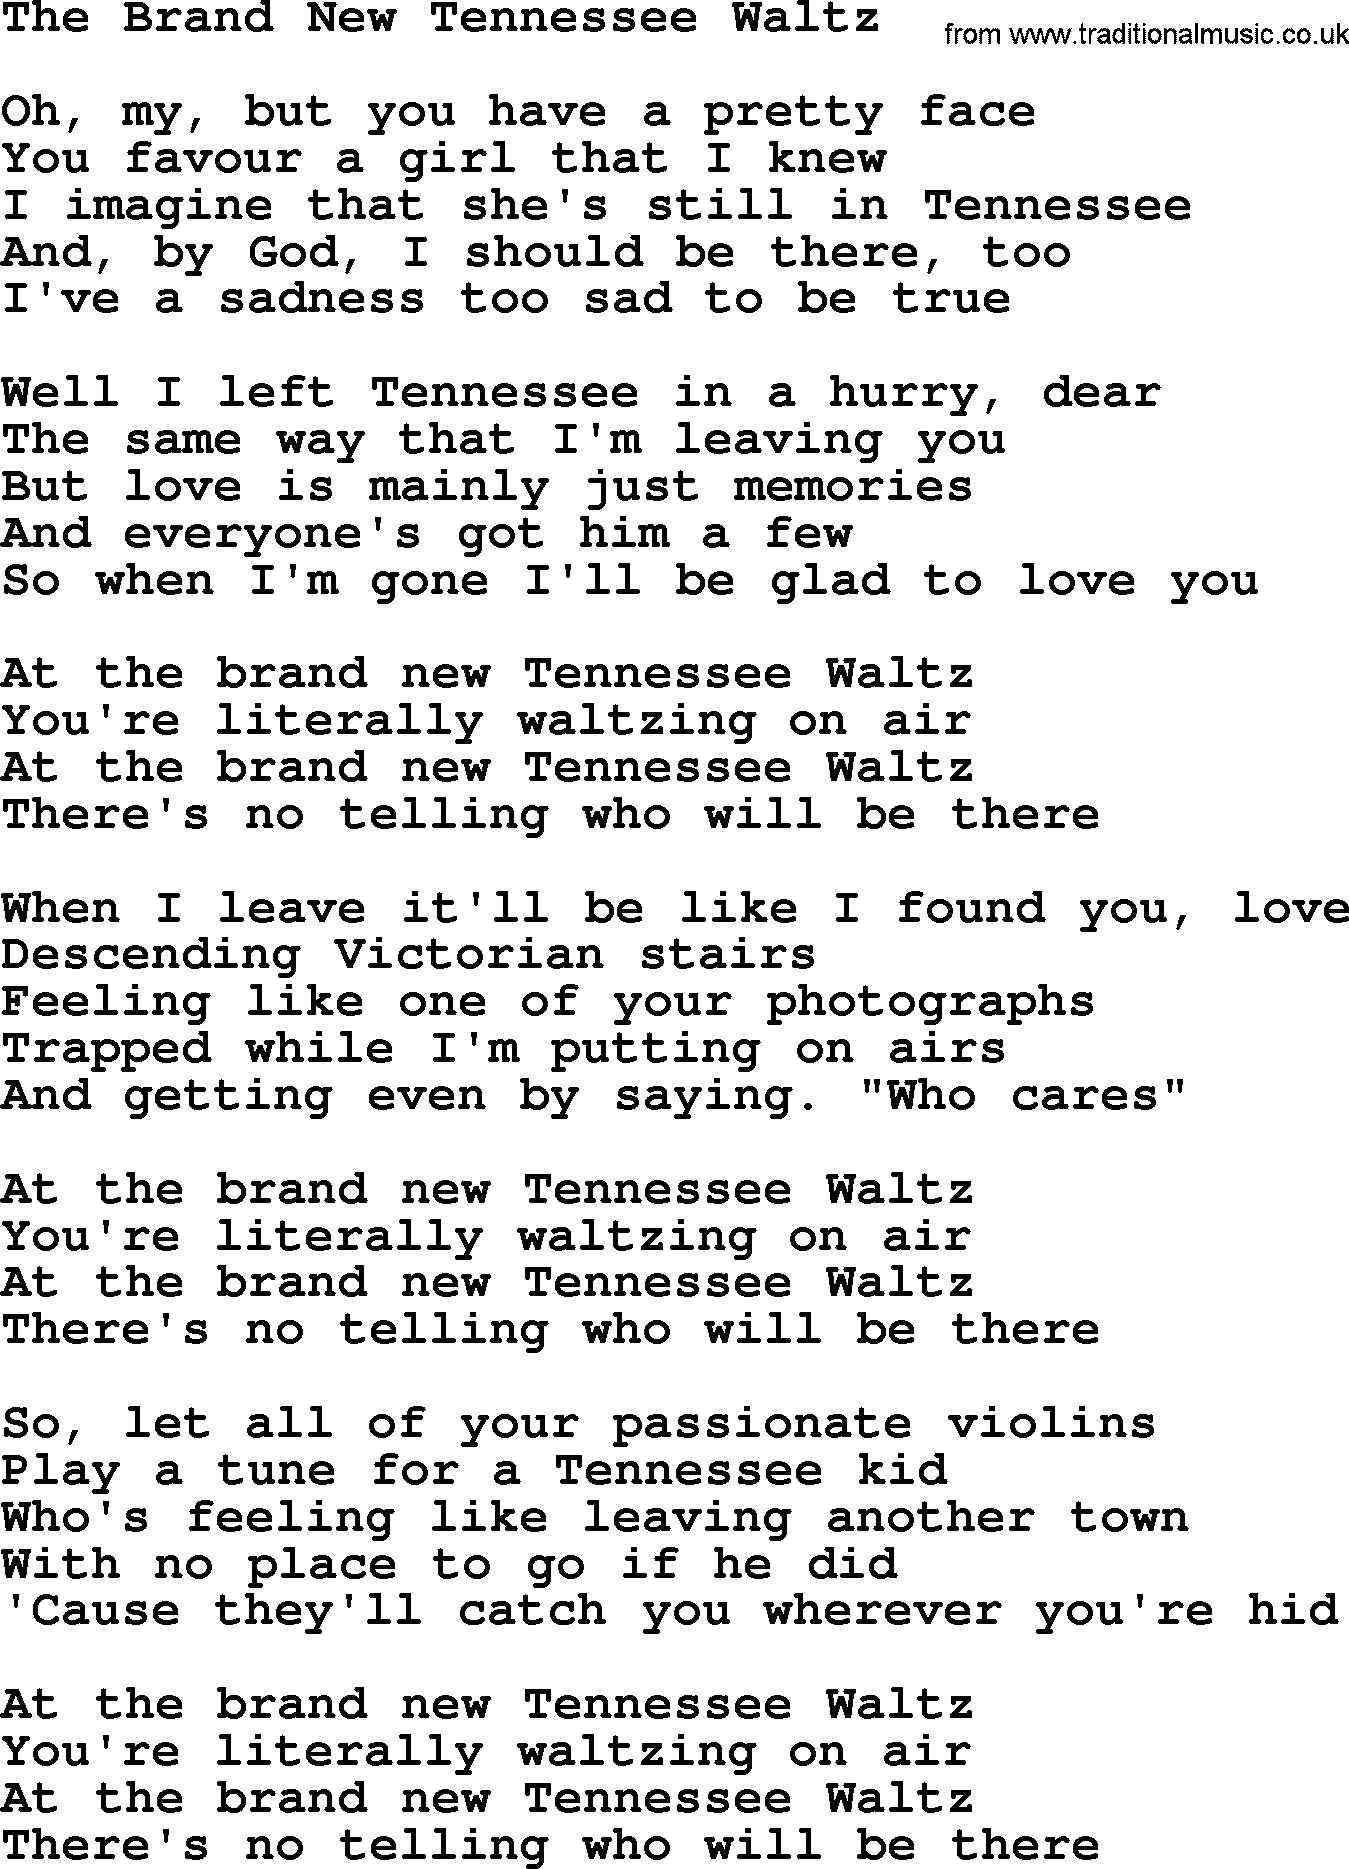 Joan Baez song The Brand New Tennessee Waltz, lyrics